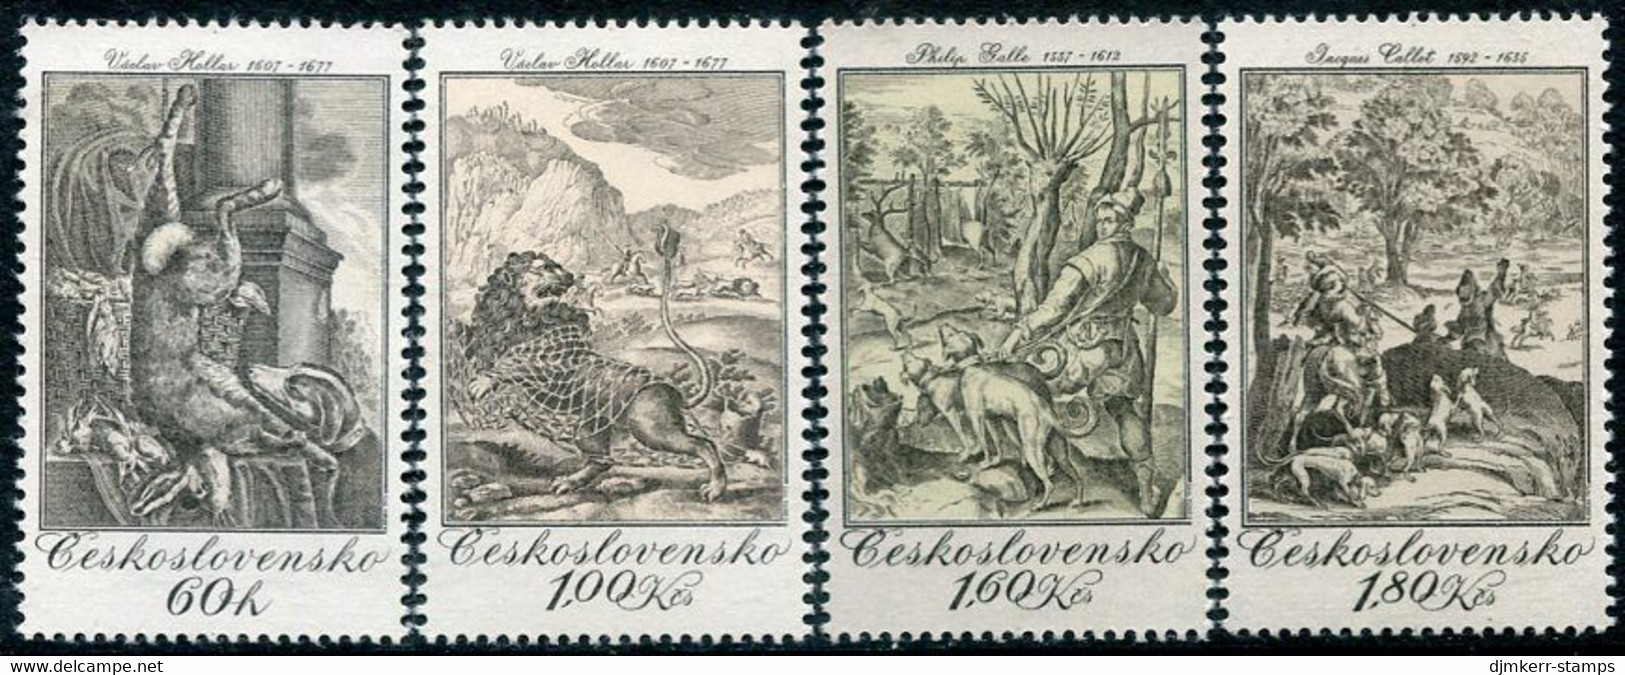 CZECHOSLOVAKIA 1975 Engravings With Hunting Scenes MNH / **. Michel 2240-43 - Ongebruikt